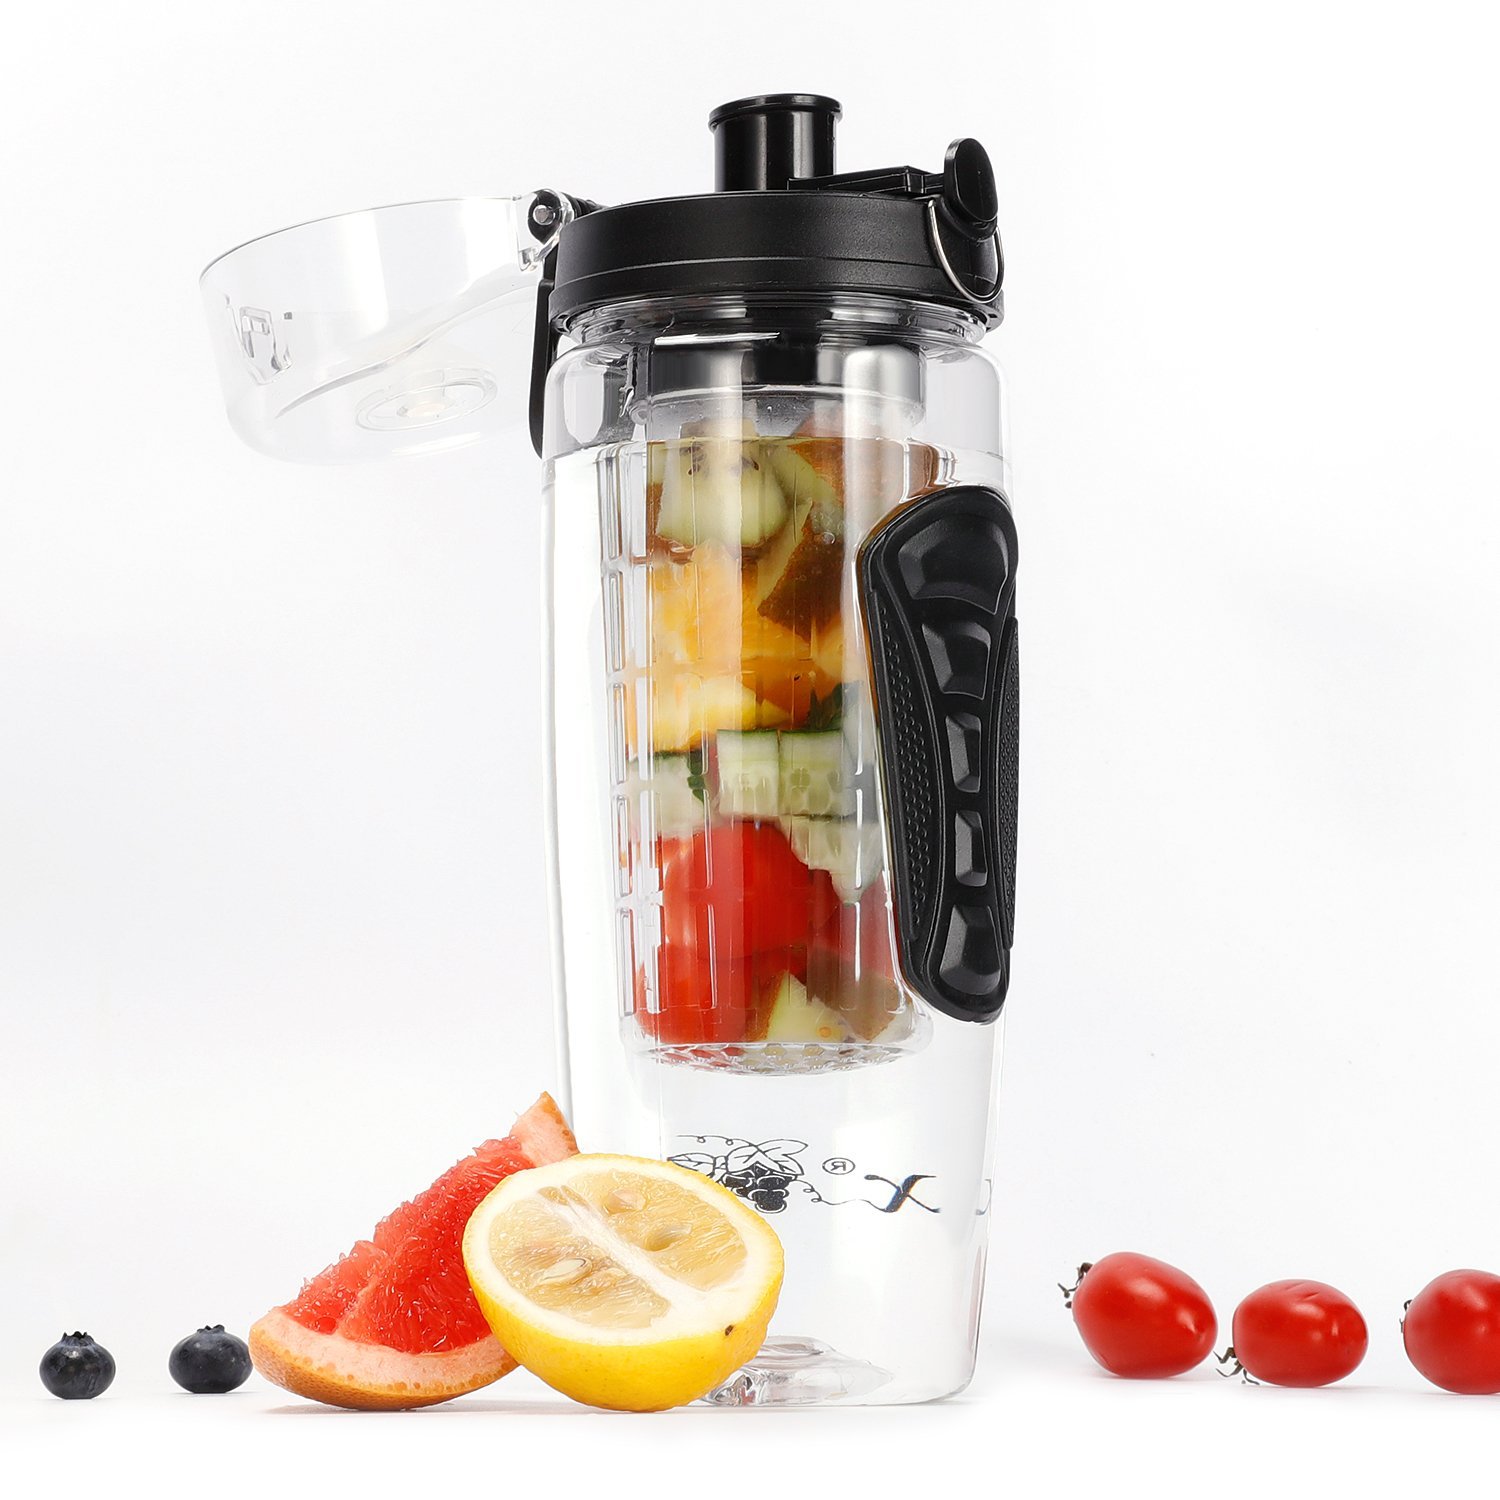 Gonex 32oz fruit infuser BPA free water bottle for $7